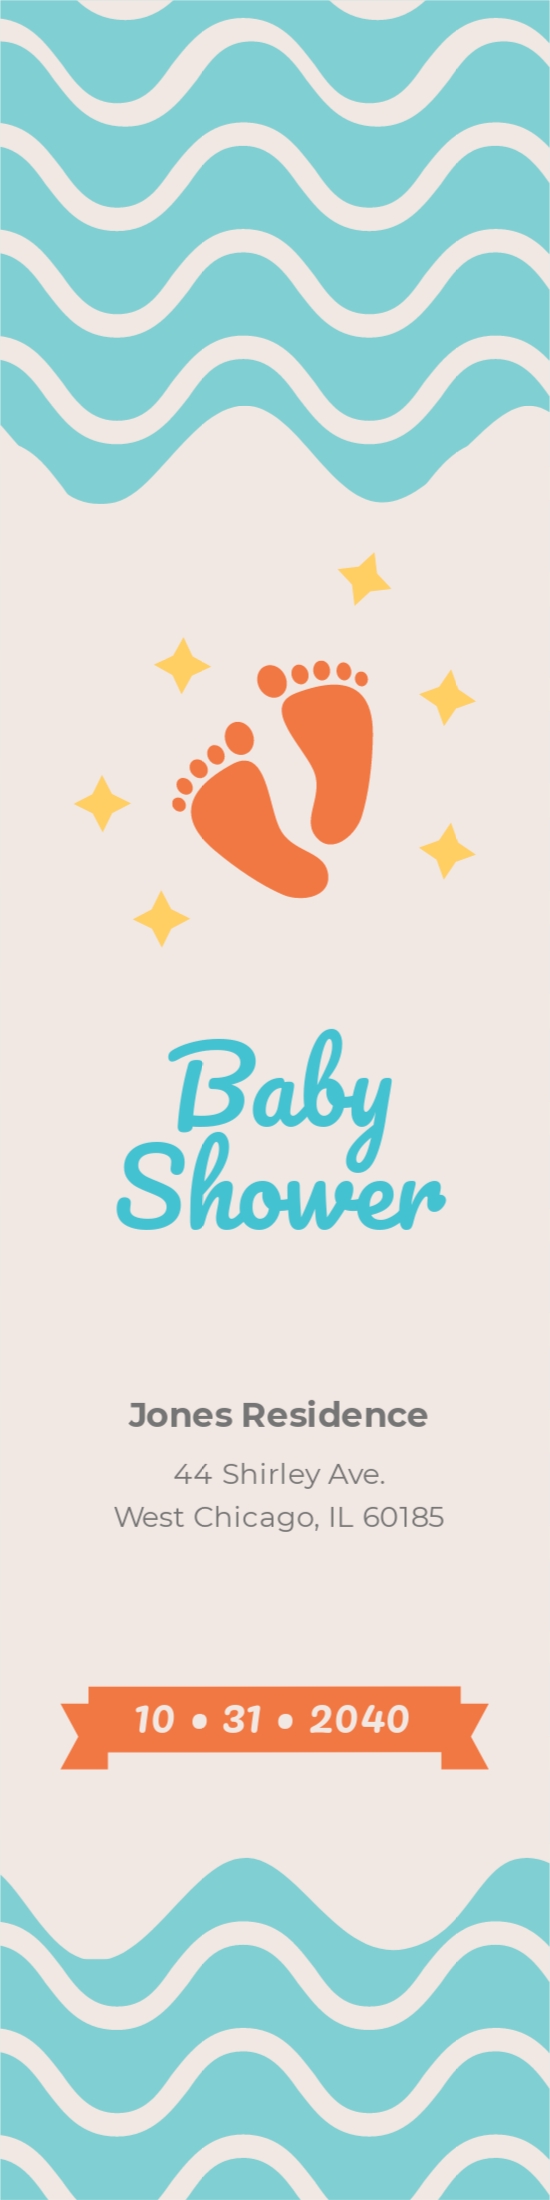 Free Baby Shower Bookmark Template.jpe